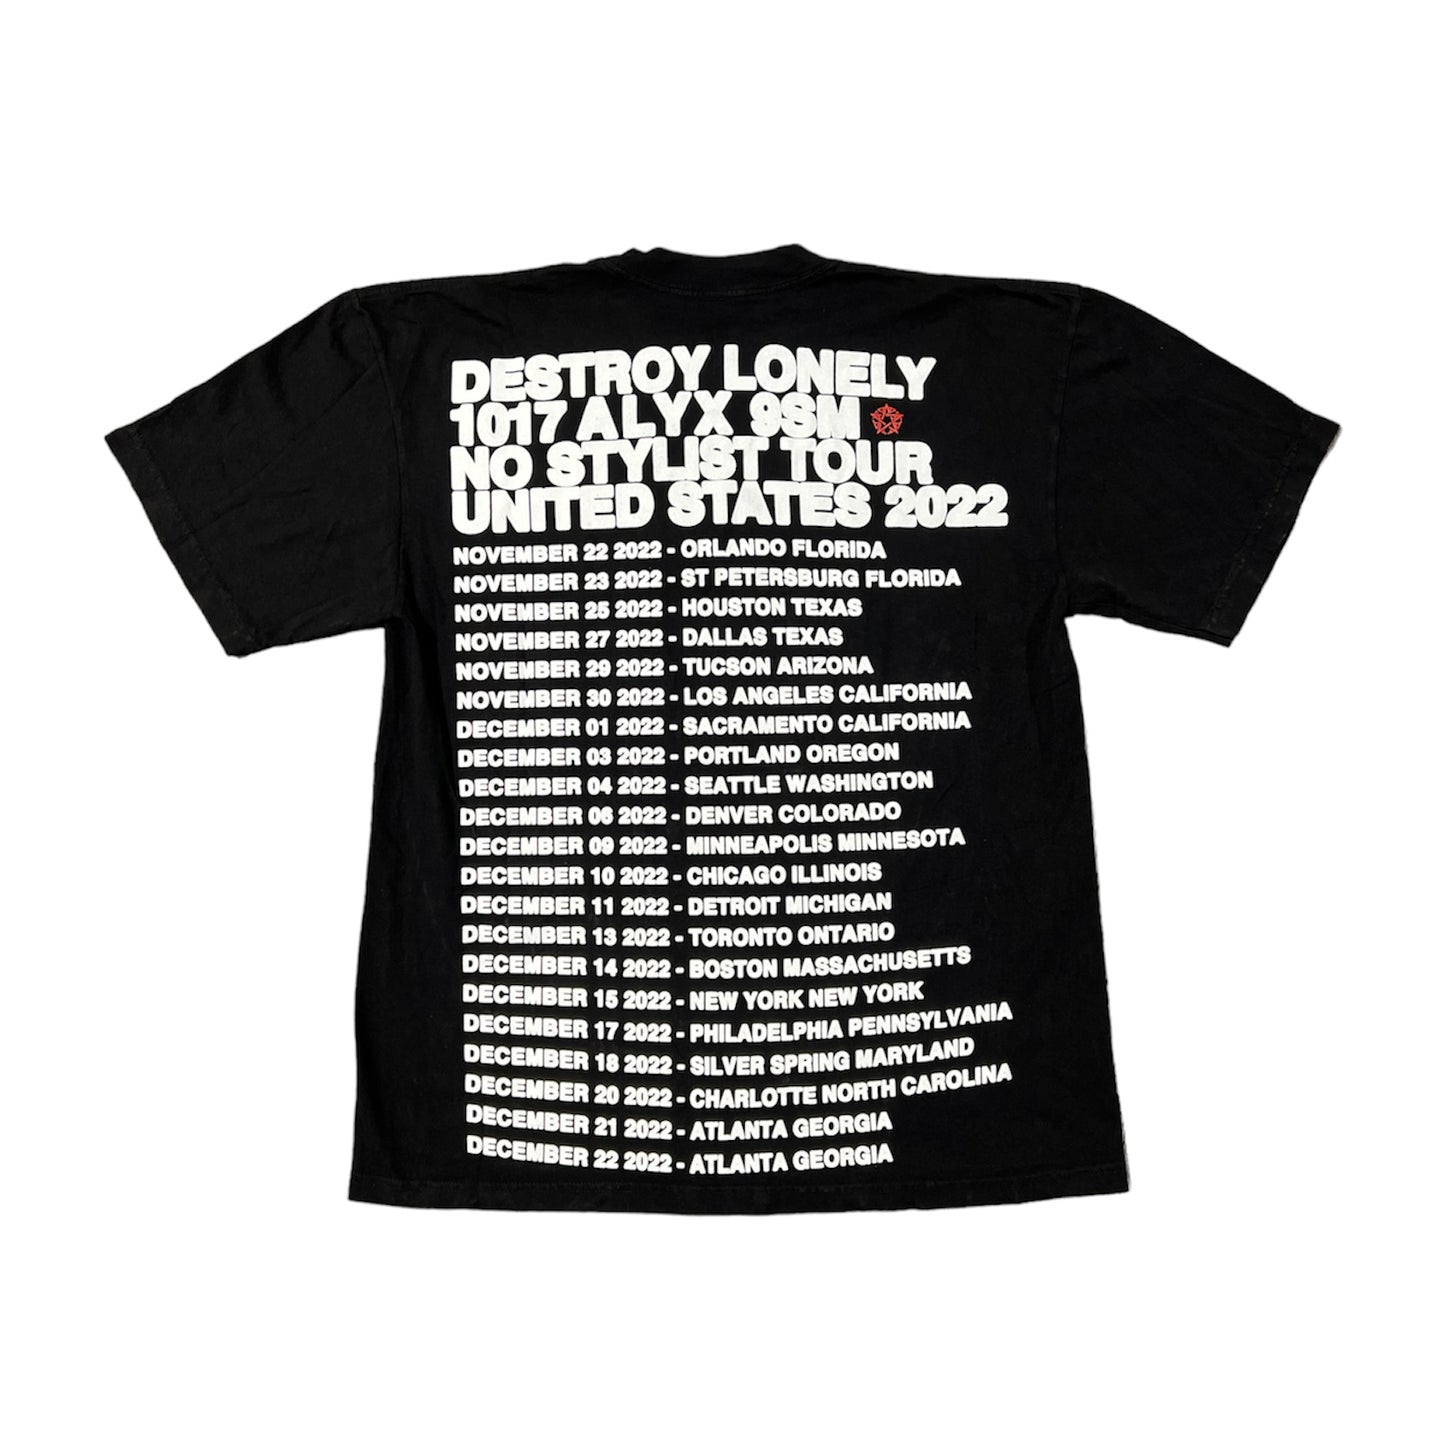 Destroy Lonely ALYX No Stylist Tour Tee (Size L)